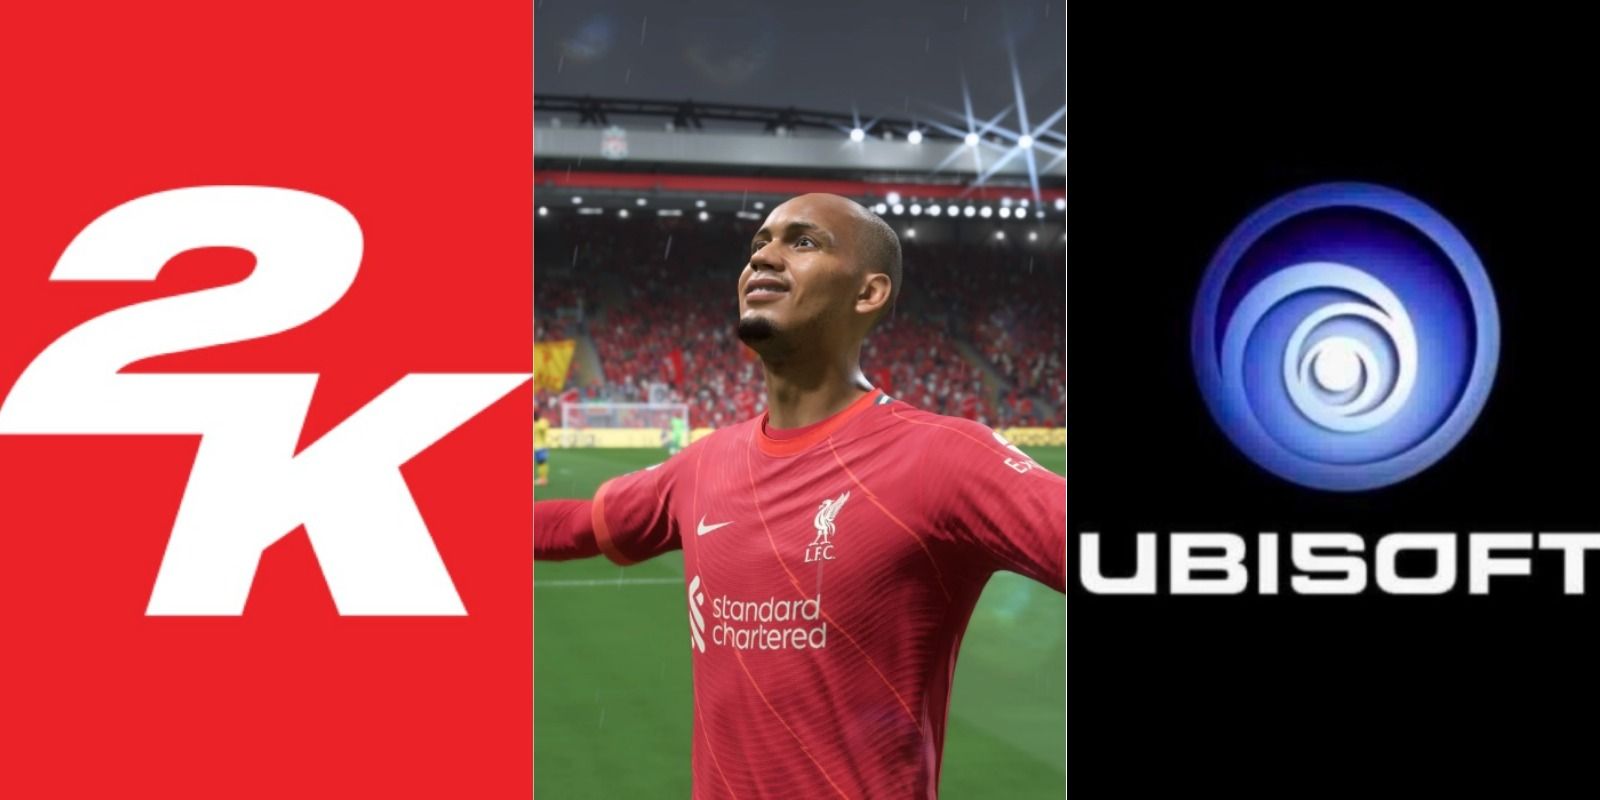 split of 2K logo, FIFA character, and Ubisoft logo